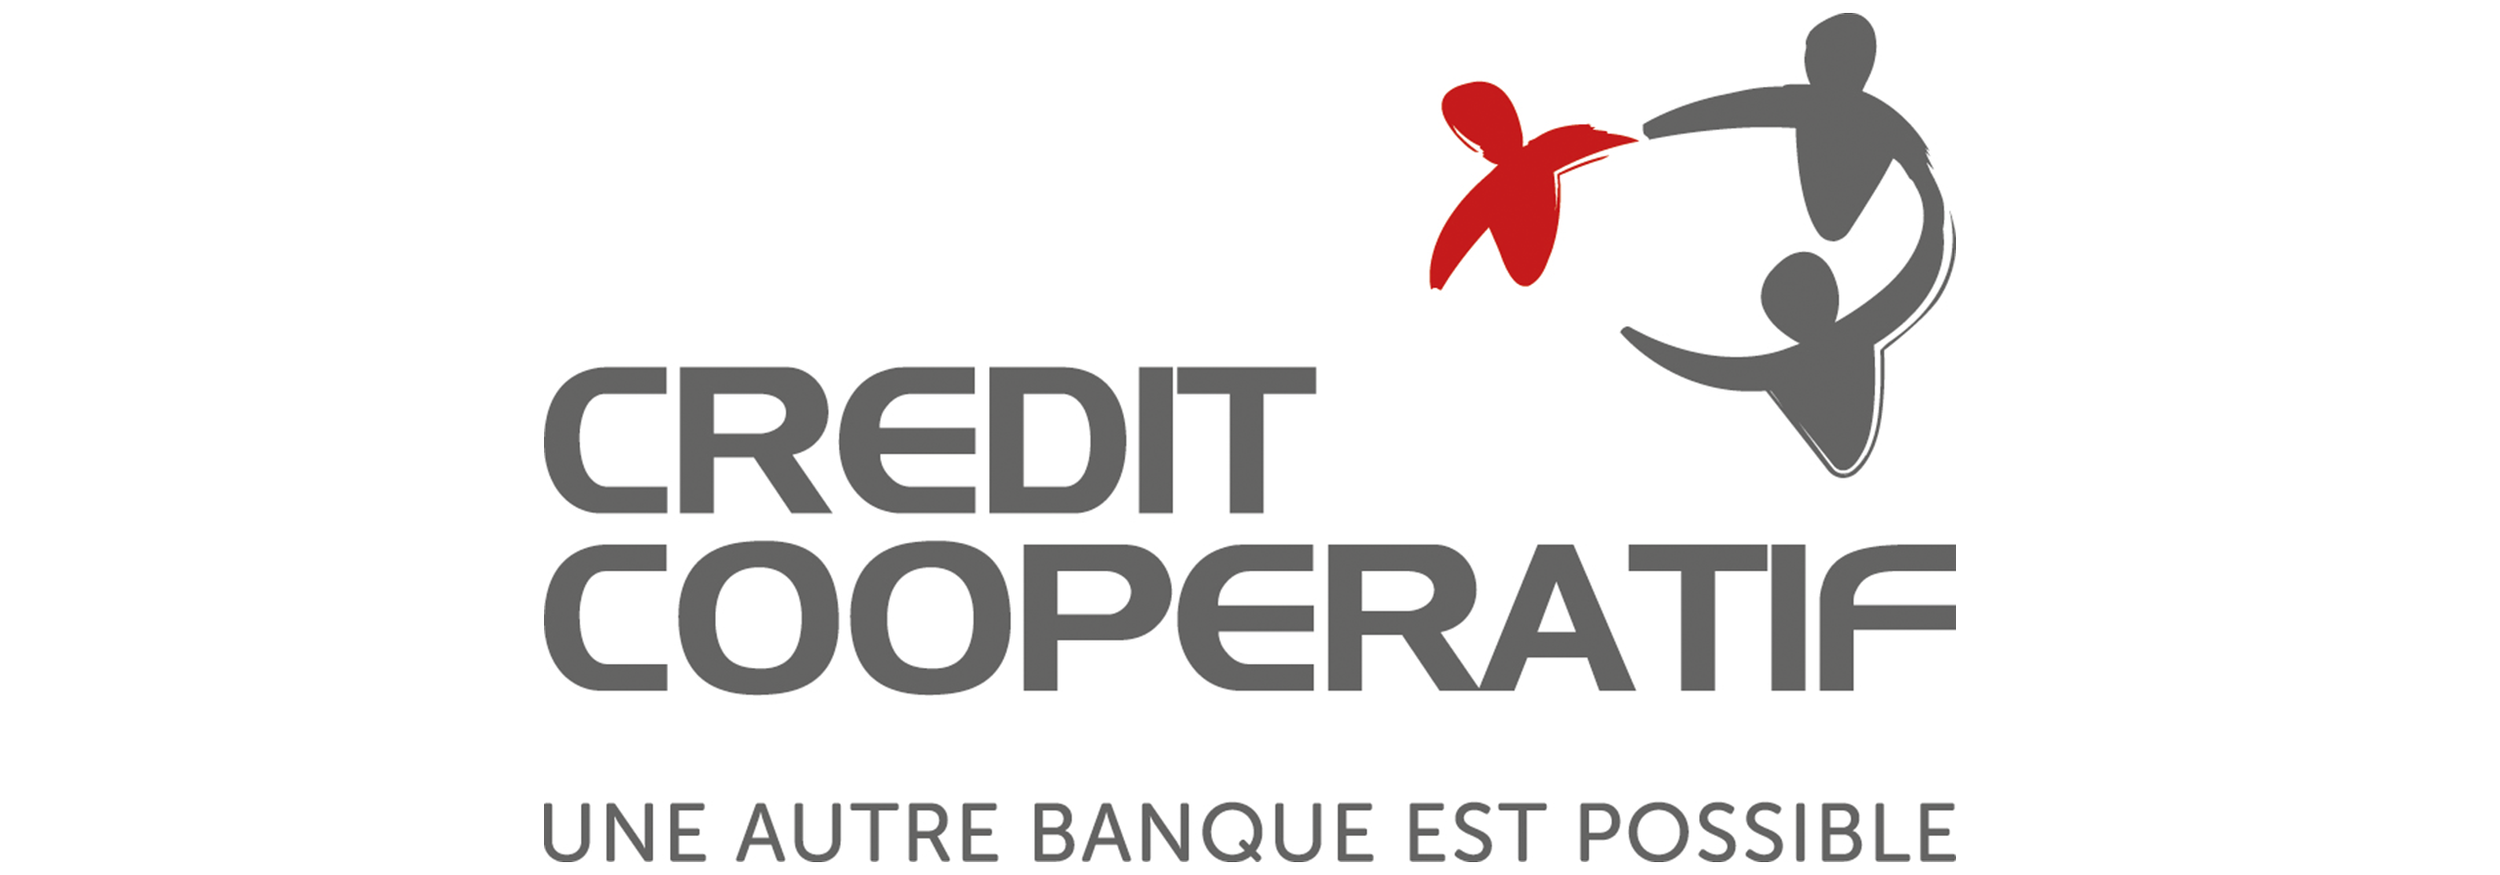 credit-coop-logo-2.png